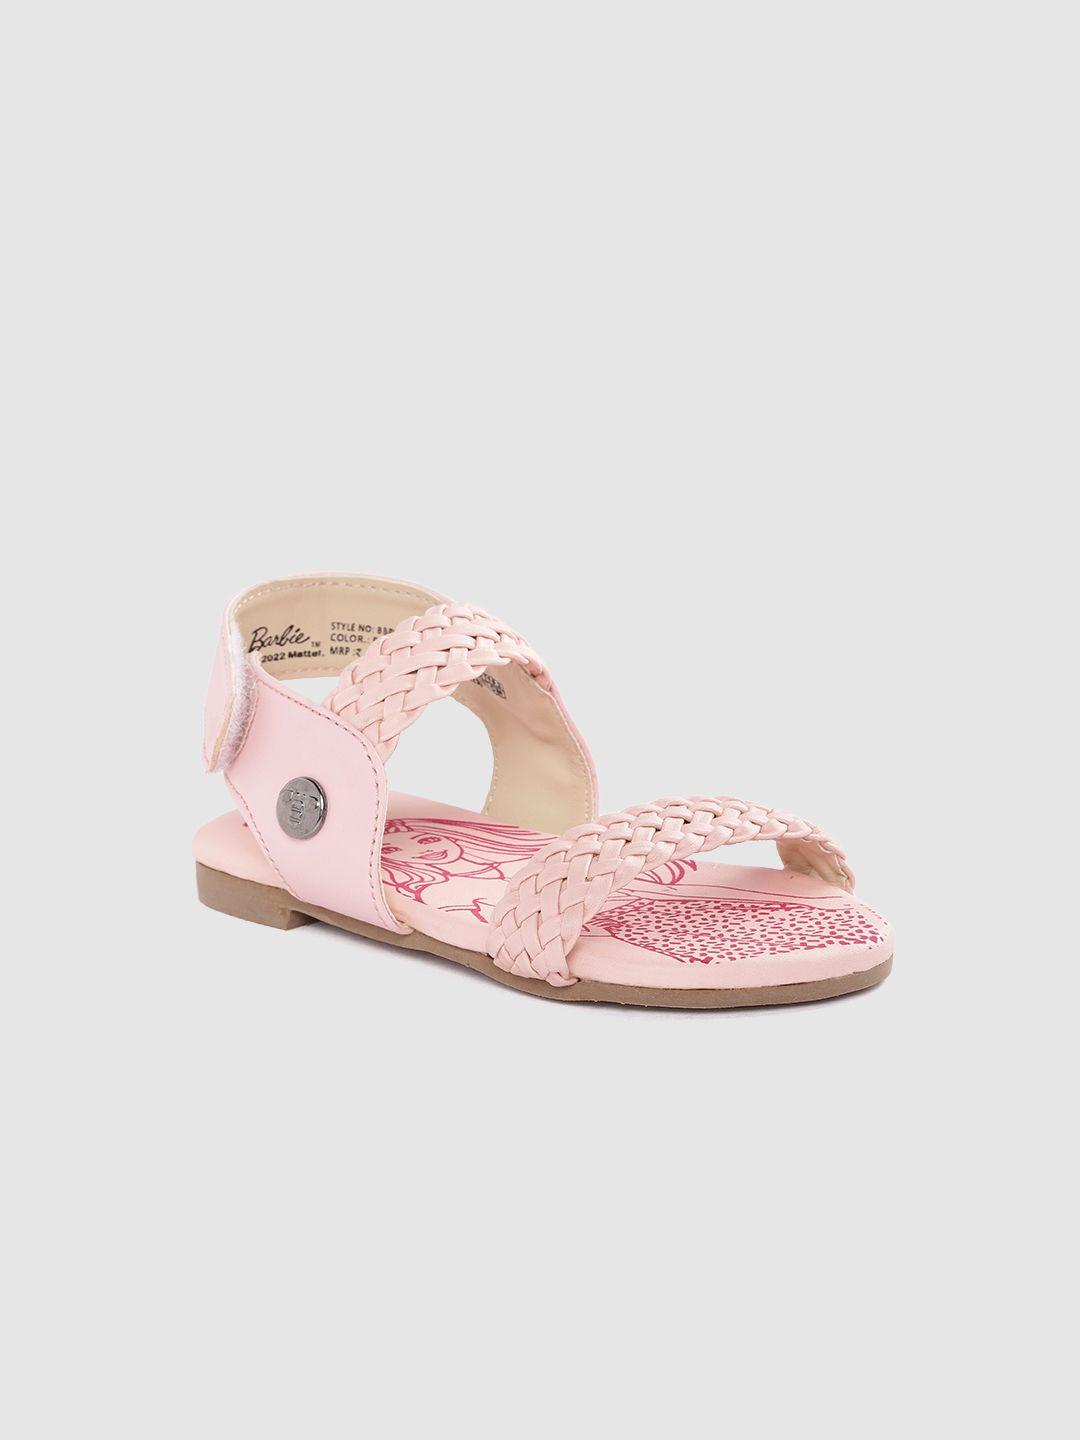 toothless Girls Pink Barbie Comfort Sandals